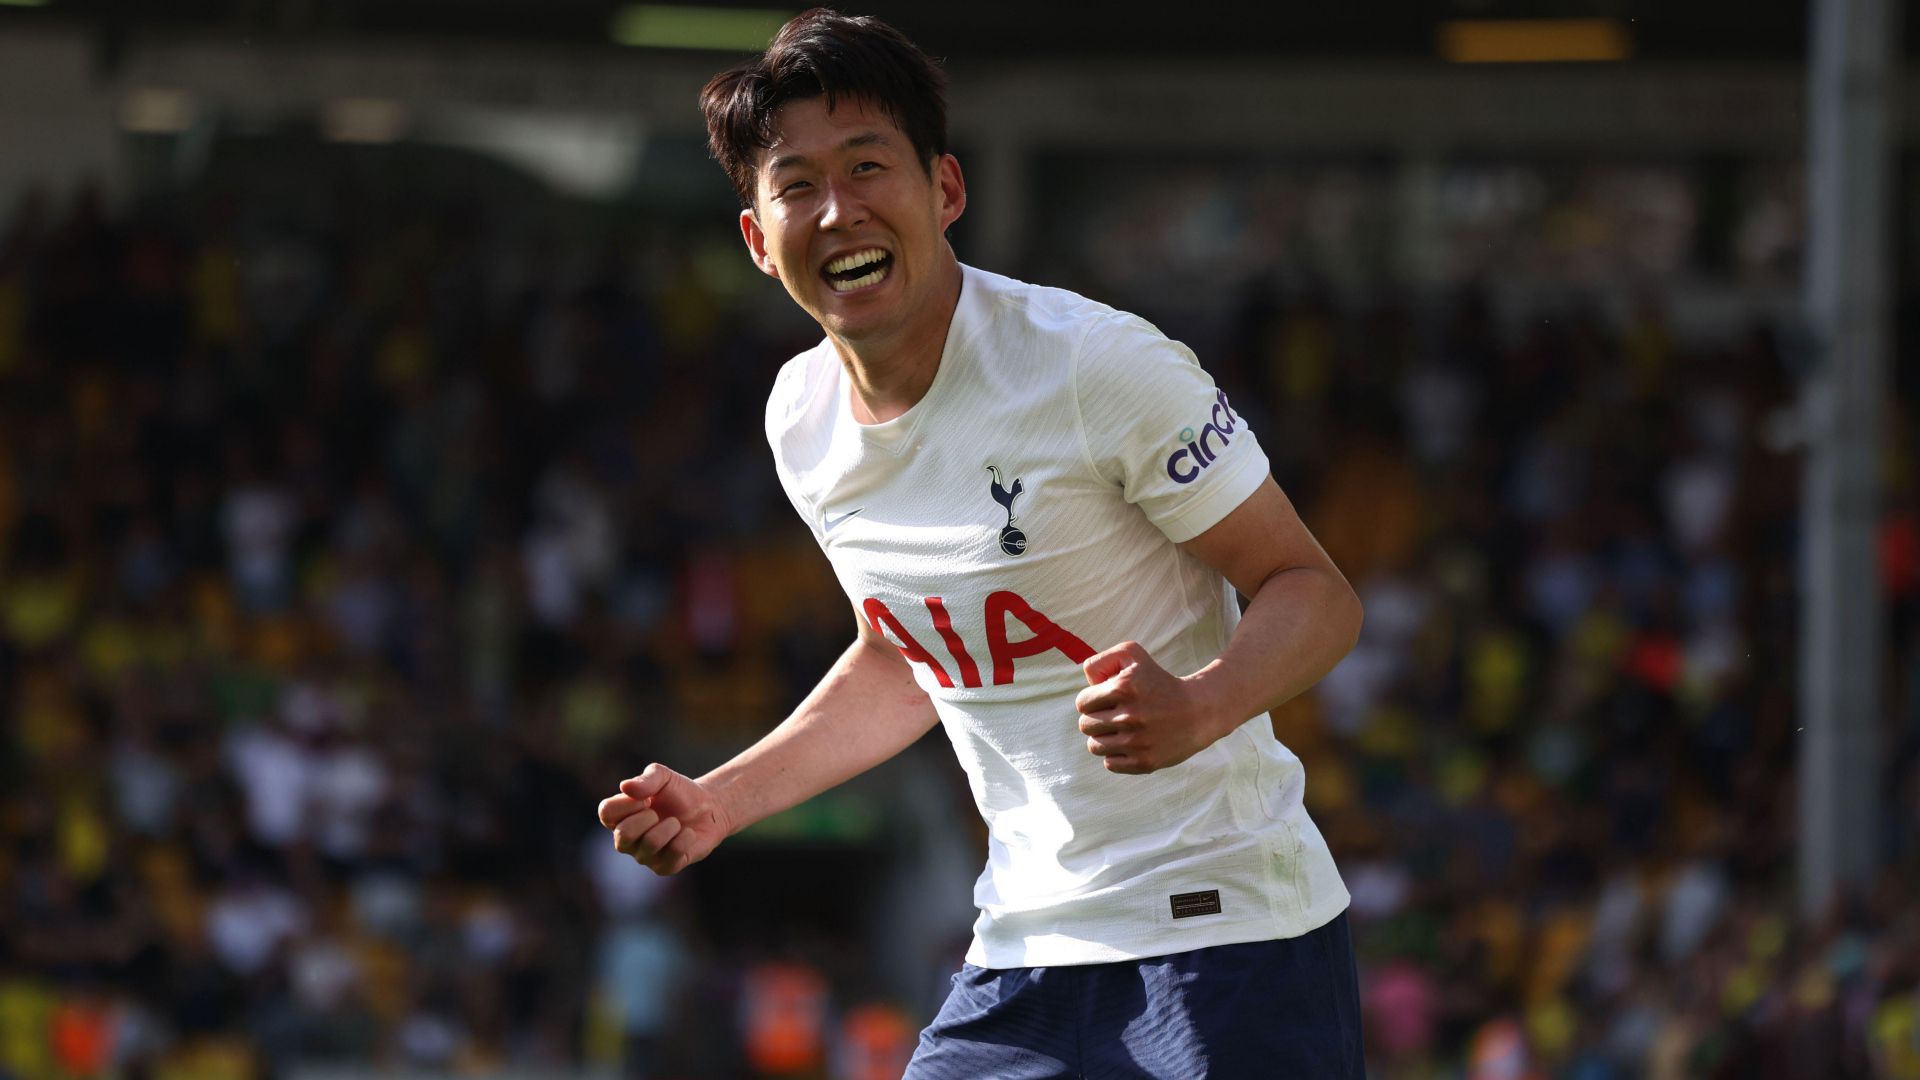 Crystal Palace vs Tottenham highlights: Son Heung-min secures win